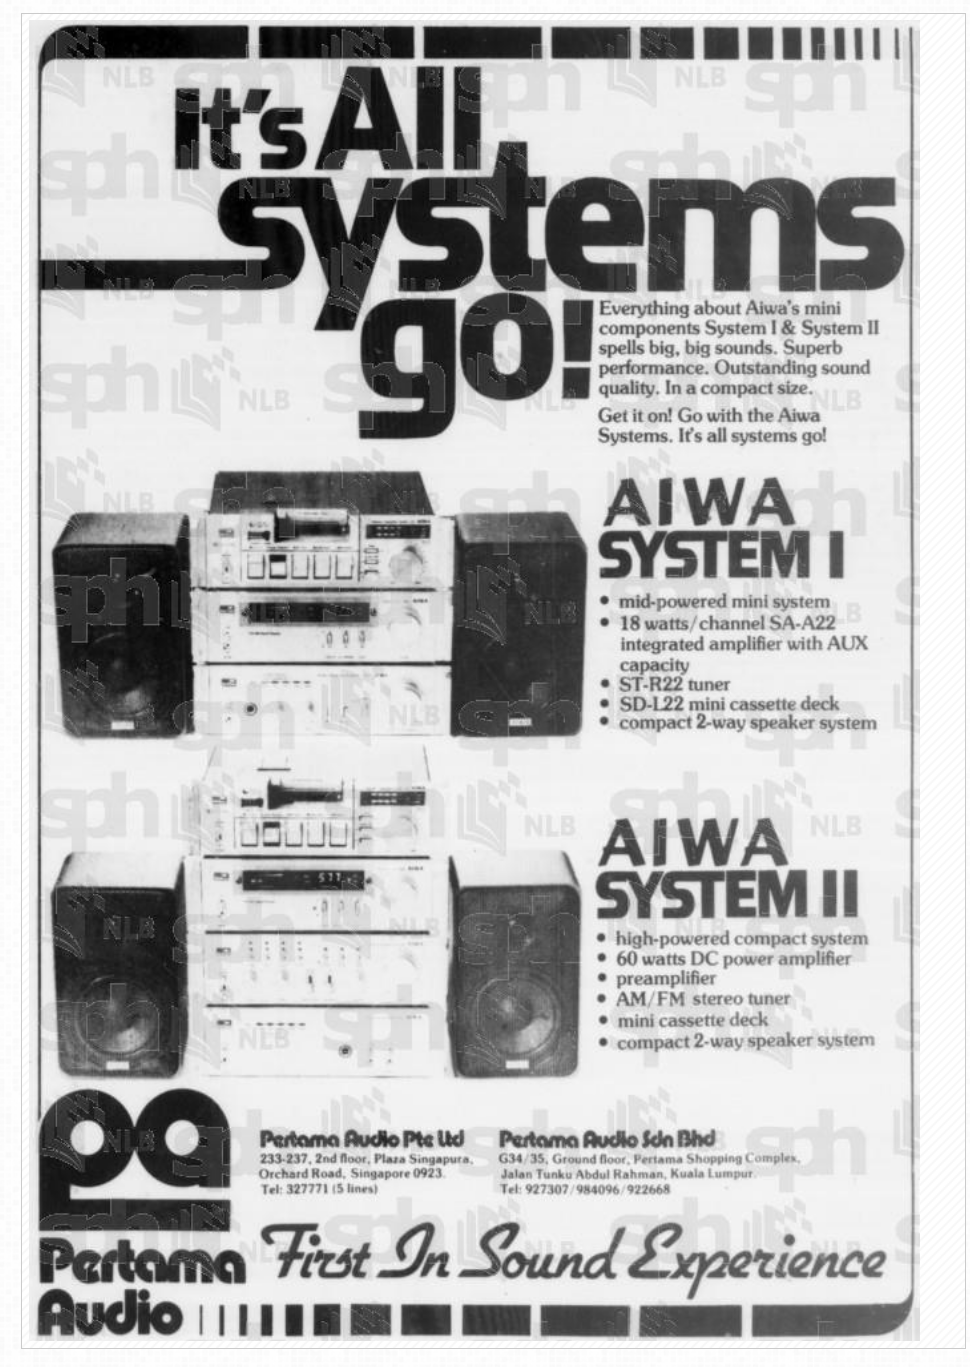 aiwa 22 system 1980.png